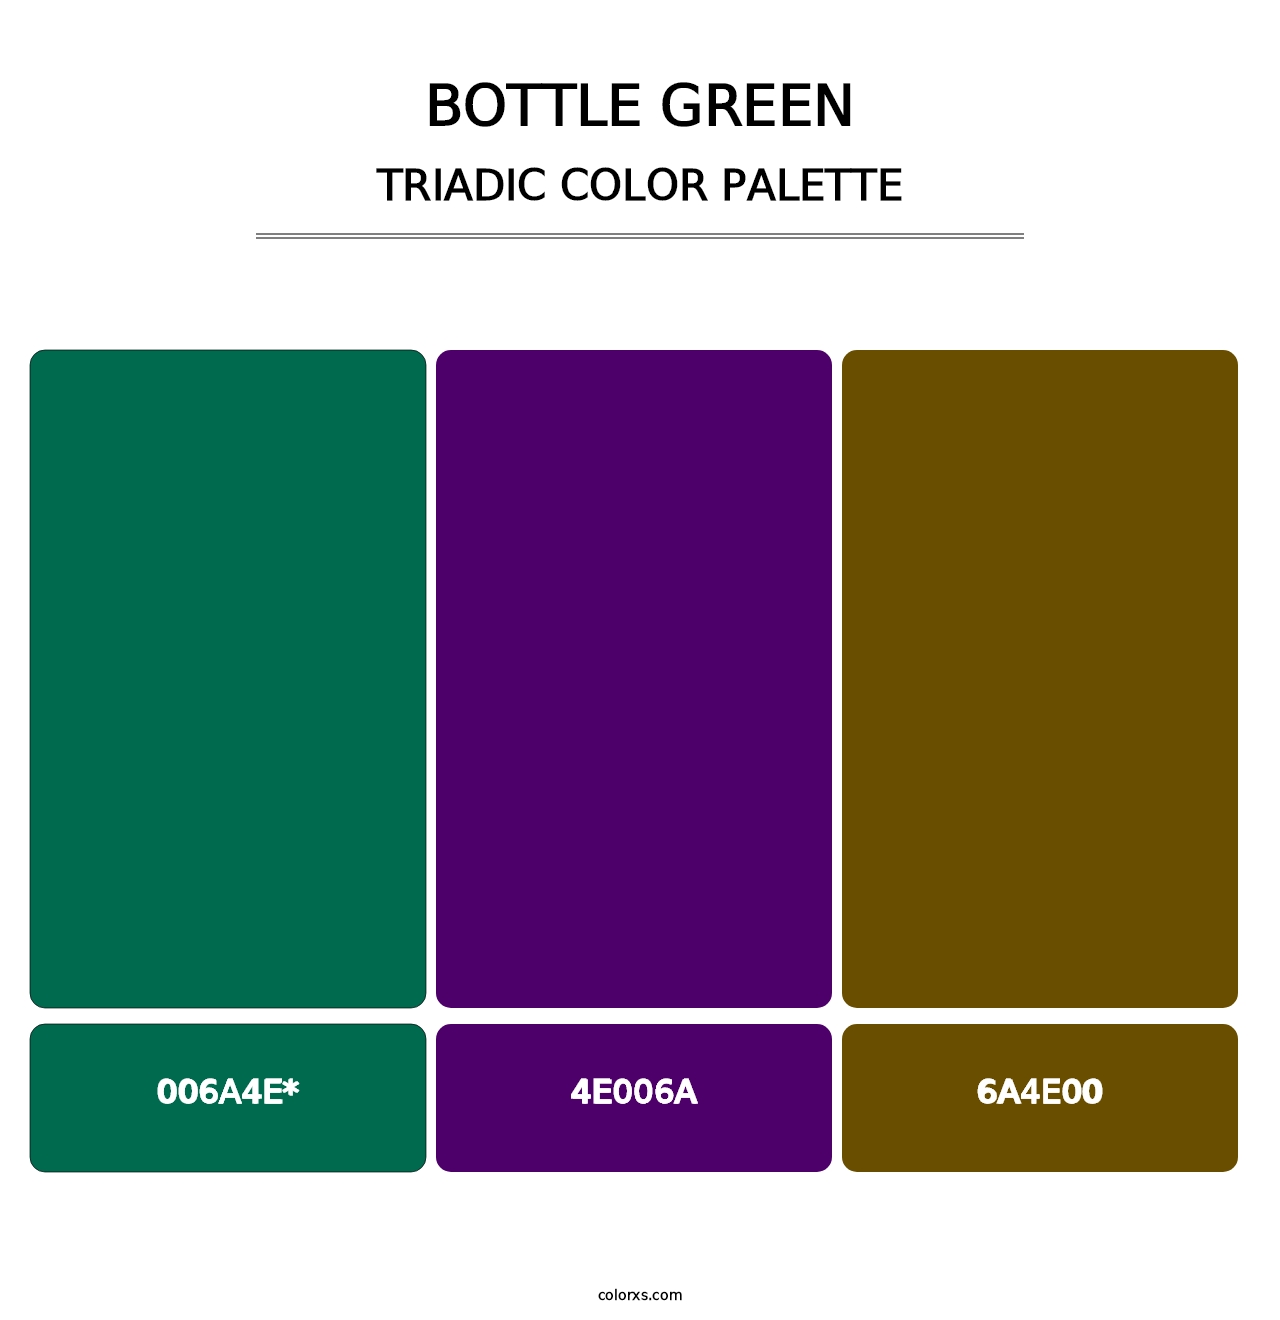 Bottle Green - Triadic Color Palette